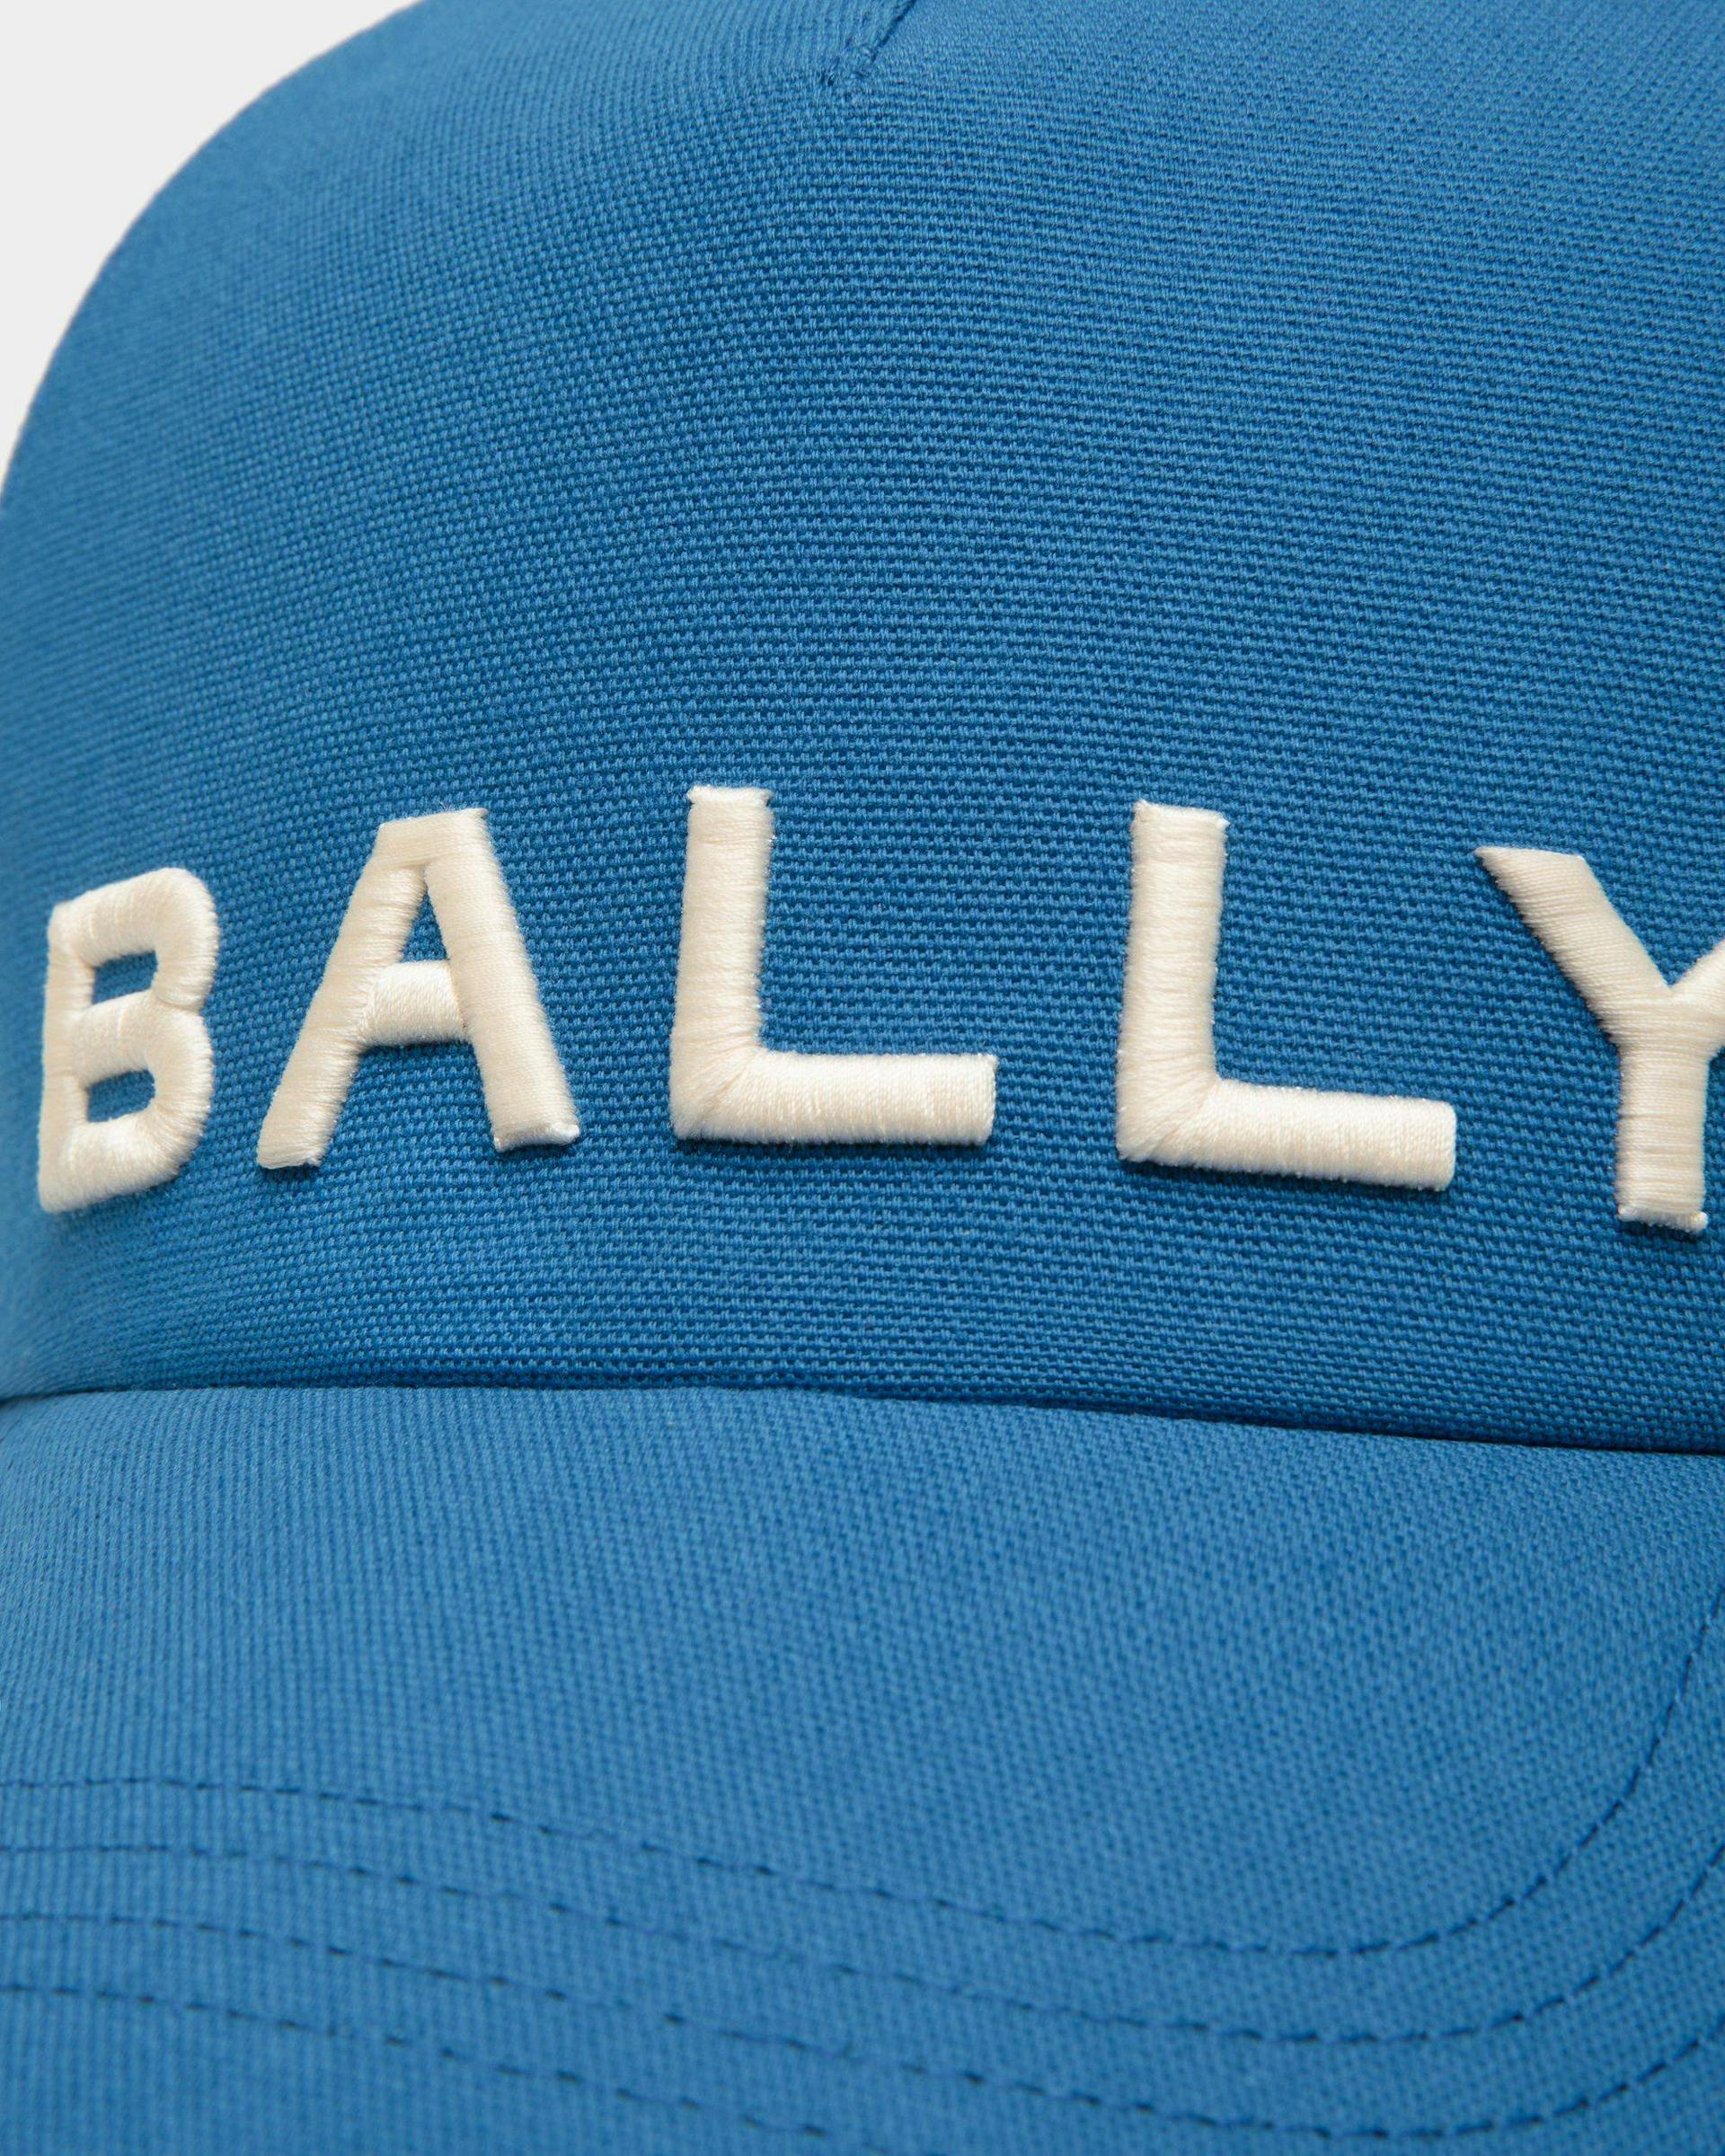 Men's Baseball Hat In Blue Cotton | Bally | Still Life Detail